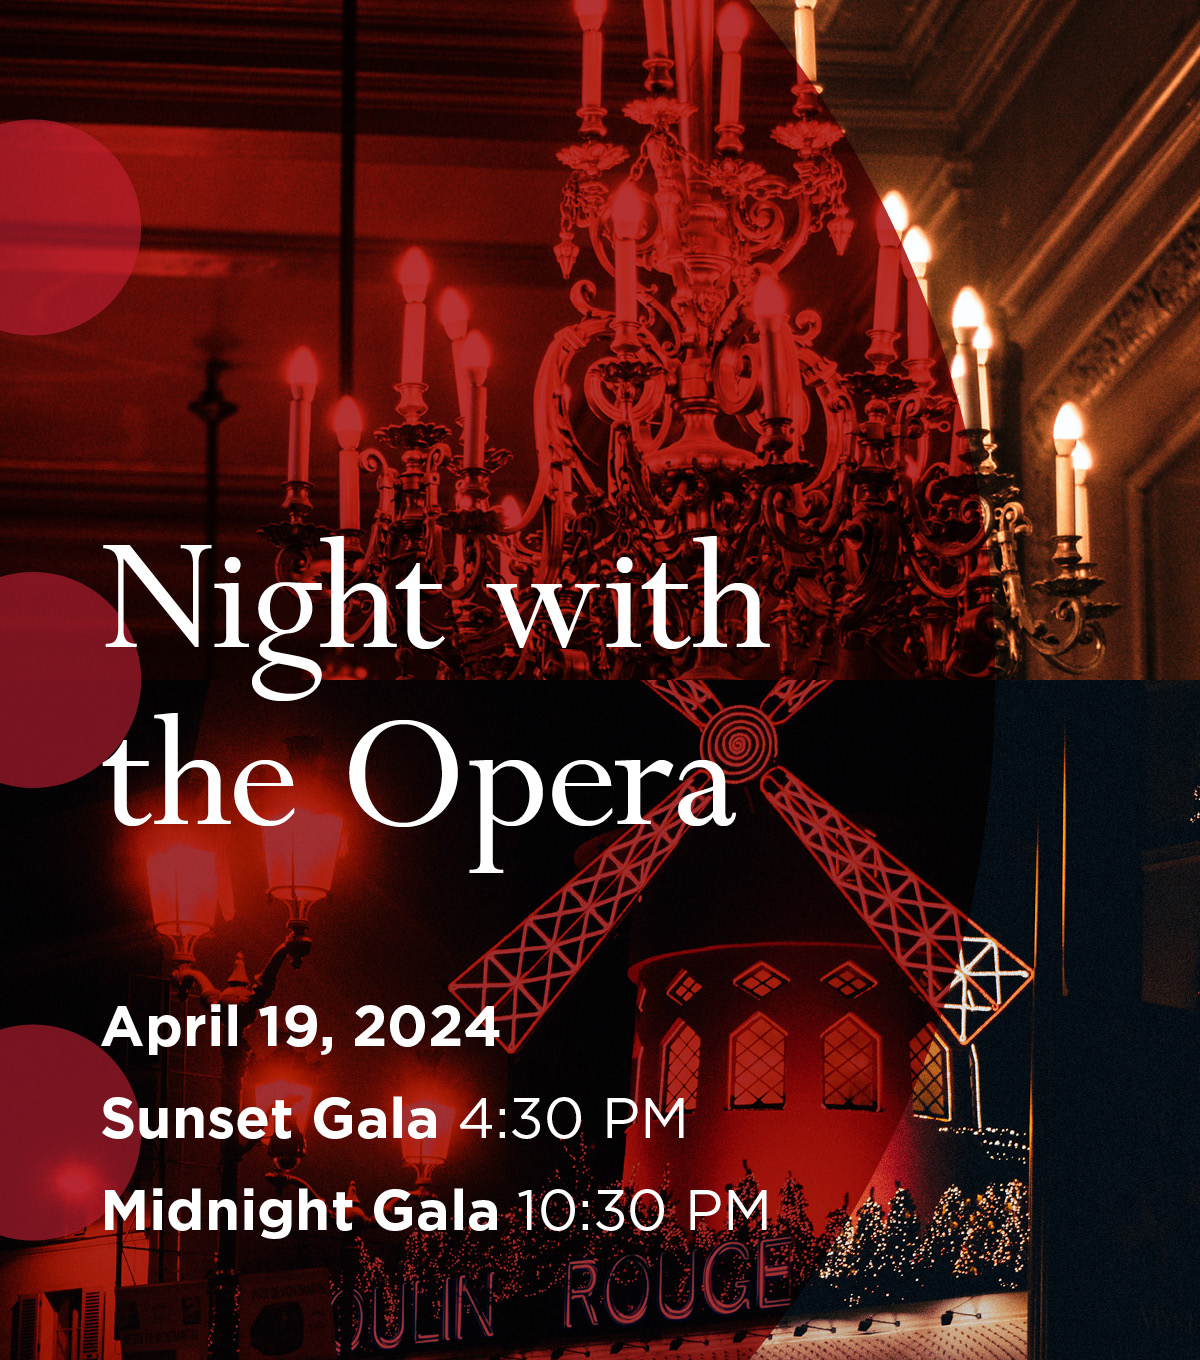 Night with the Opera | April 19, 2024, Sunset Gala 4:30 PM, Midnight Gala 10:30 PM